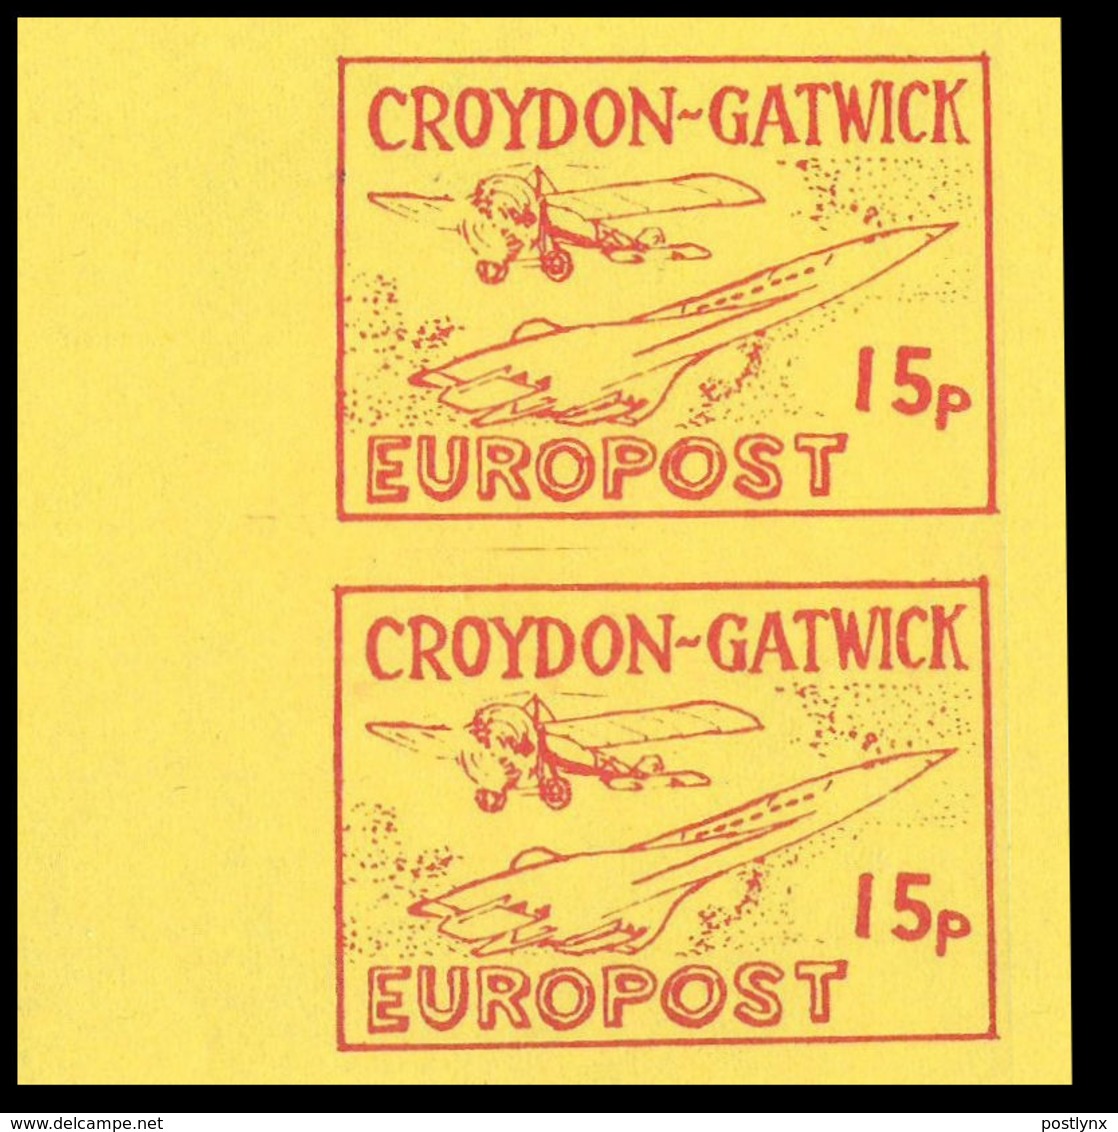 GREAT BRITAIN-Croydon Gatwick 1971 Aeroplane Concorde 15p #1 Large MARG.PAIR PROOF Yellow Paper - Essais & Réimpressions